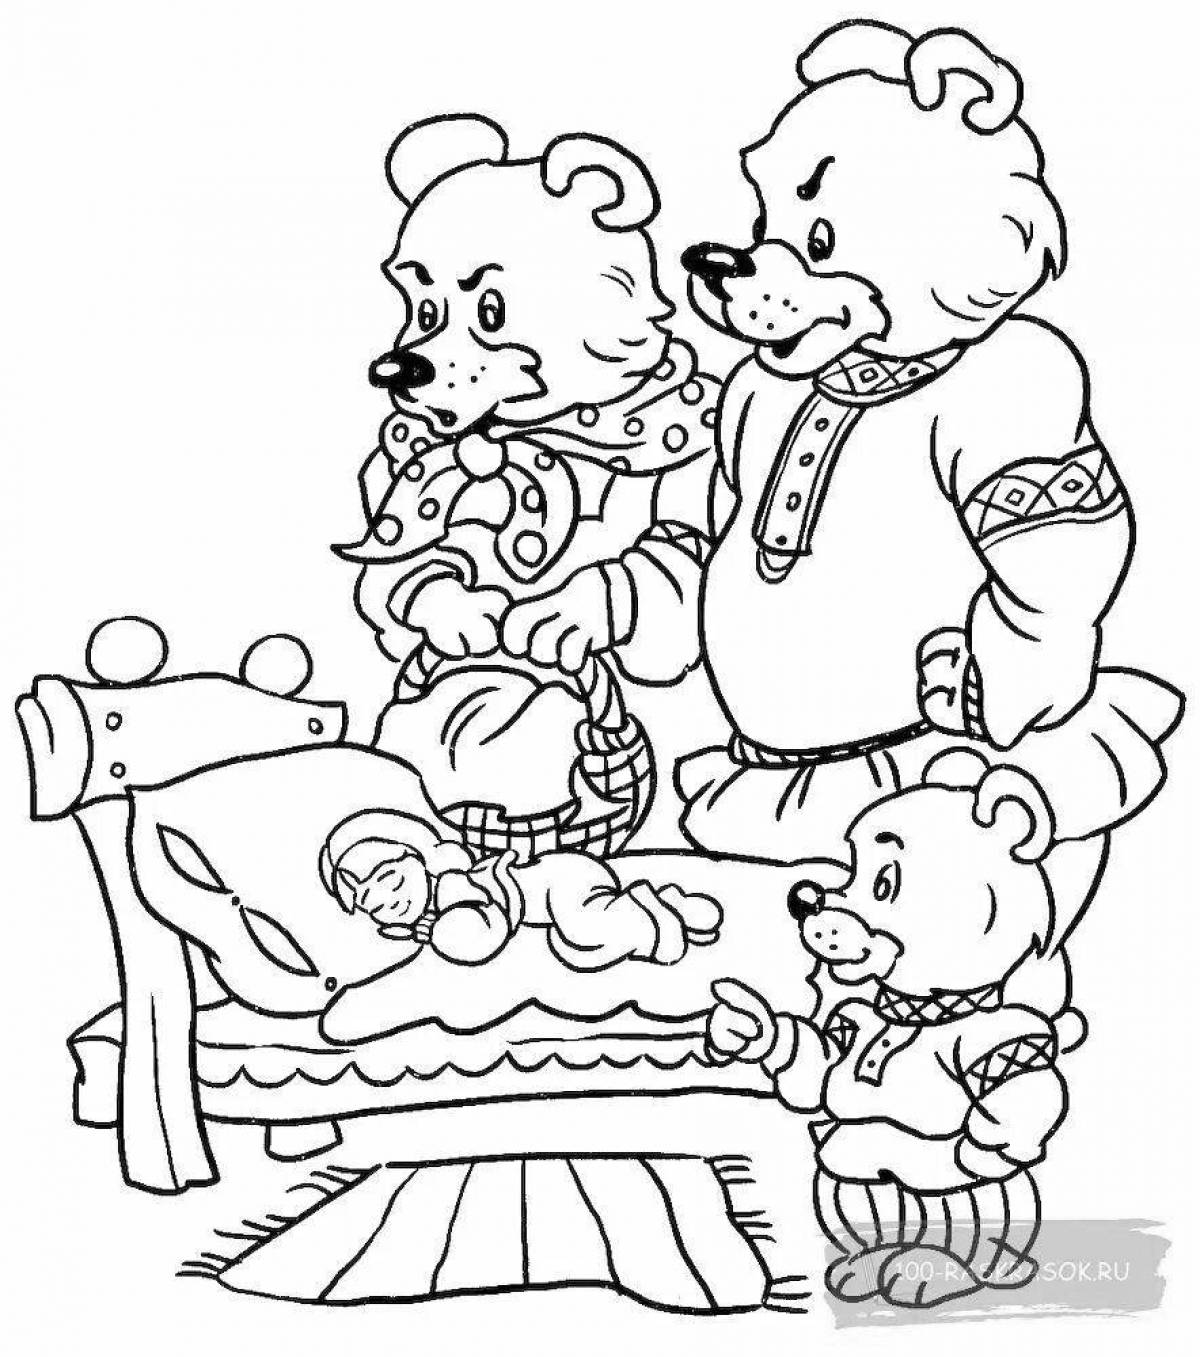 Playful three bears and masha coloring book